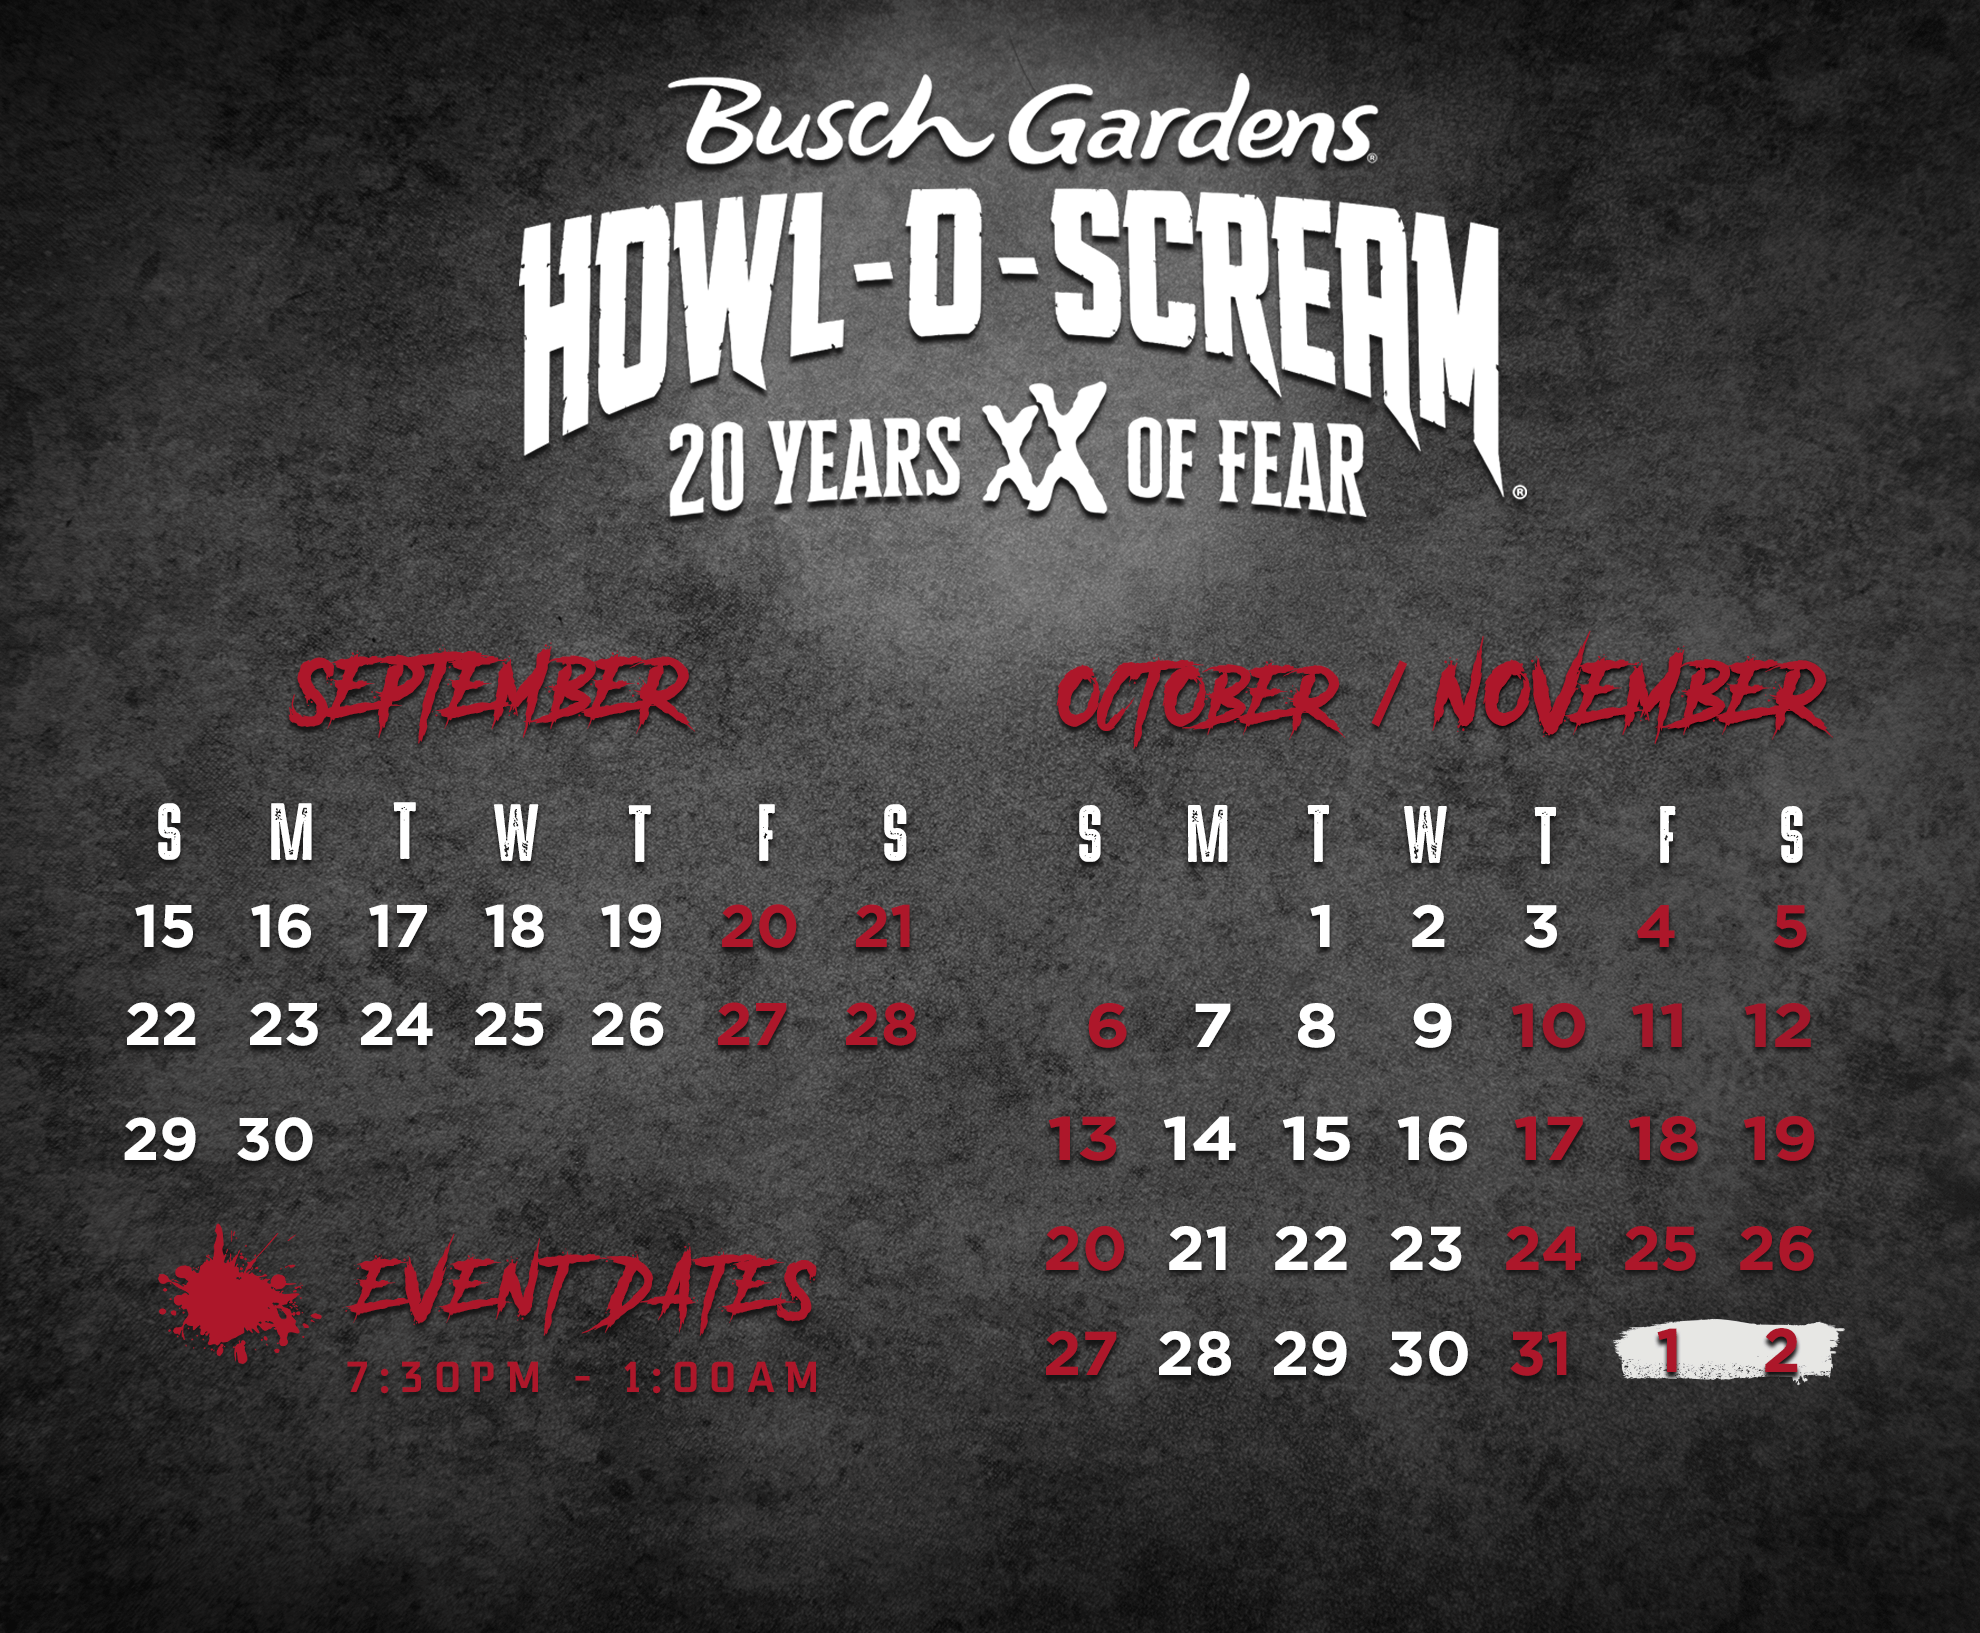 Preview Of Howl O Scream 2019 At Busch Gardens Touring Central